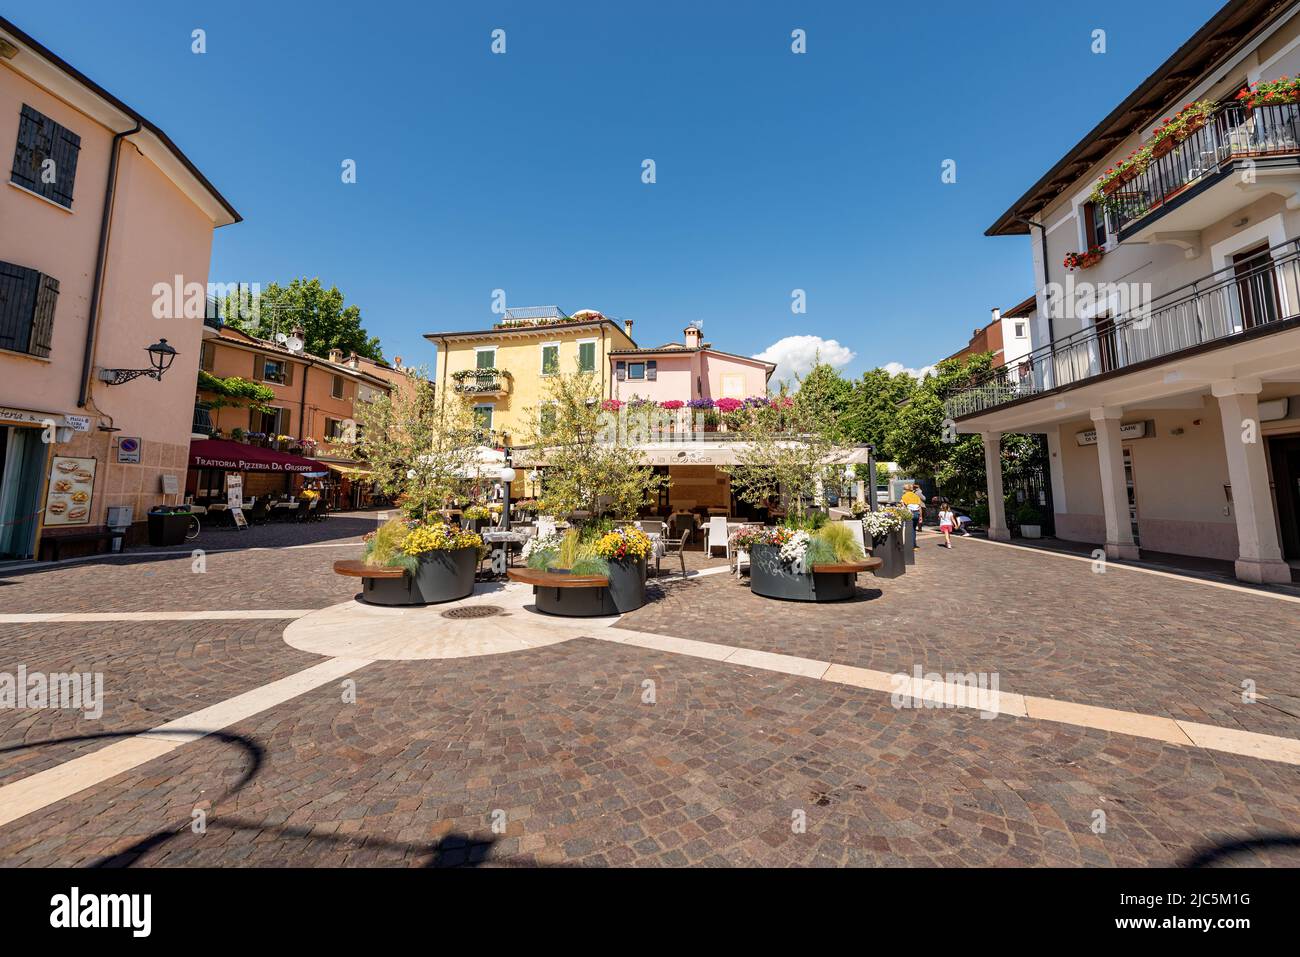 Small square in Bardolino village with restaurants and bars. Tourist resort on the coast of Lake Garda (Lago di Garda). Verona province, Veneto, Italy Stock Photo